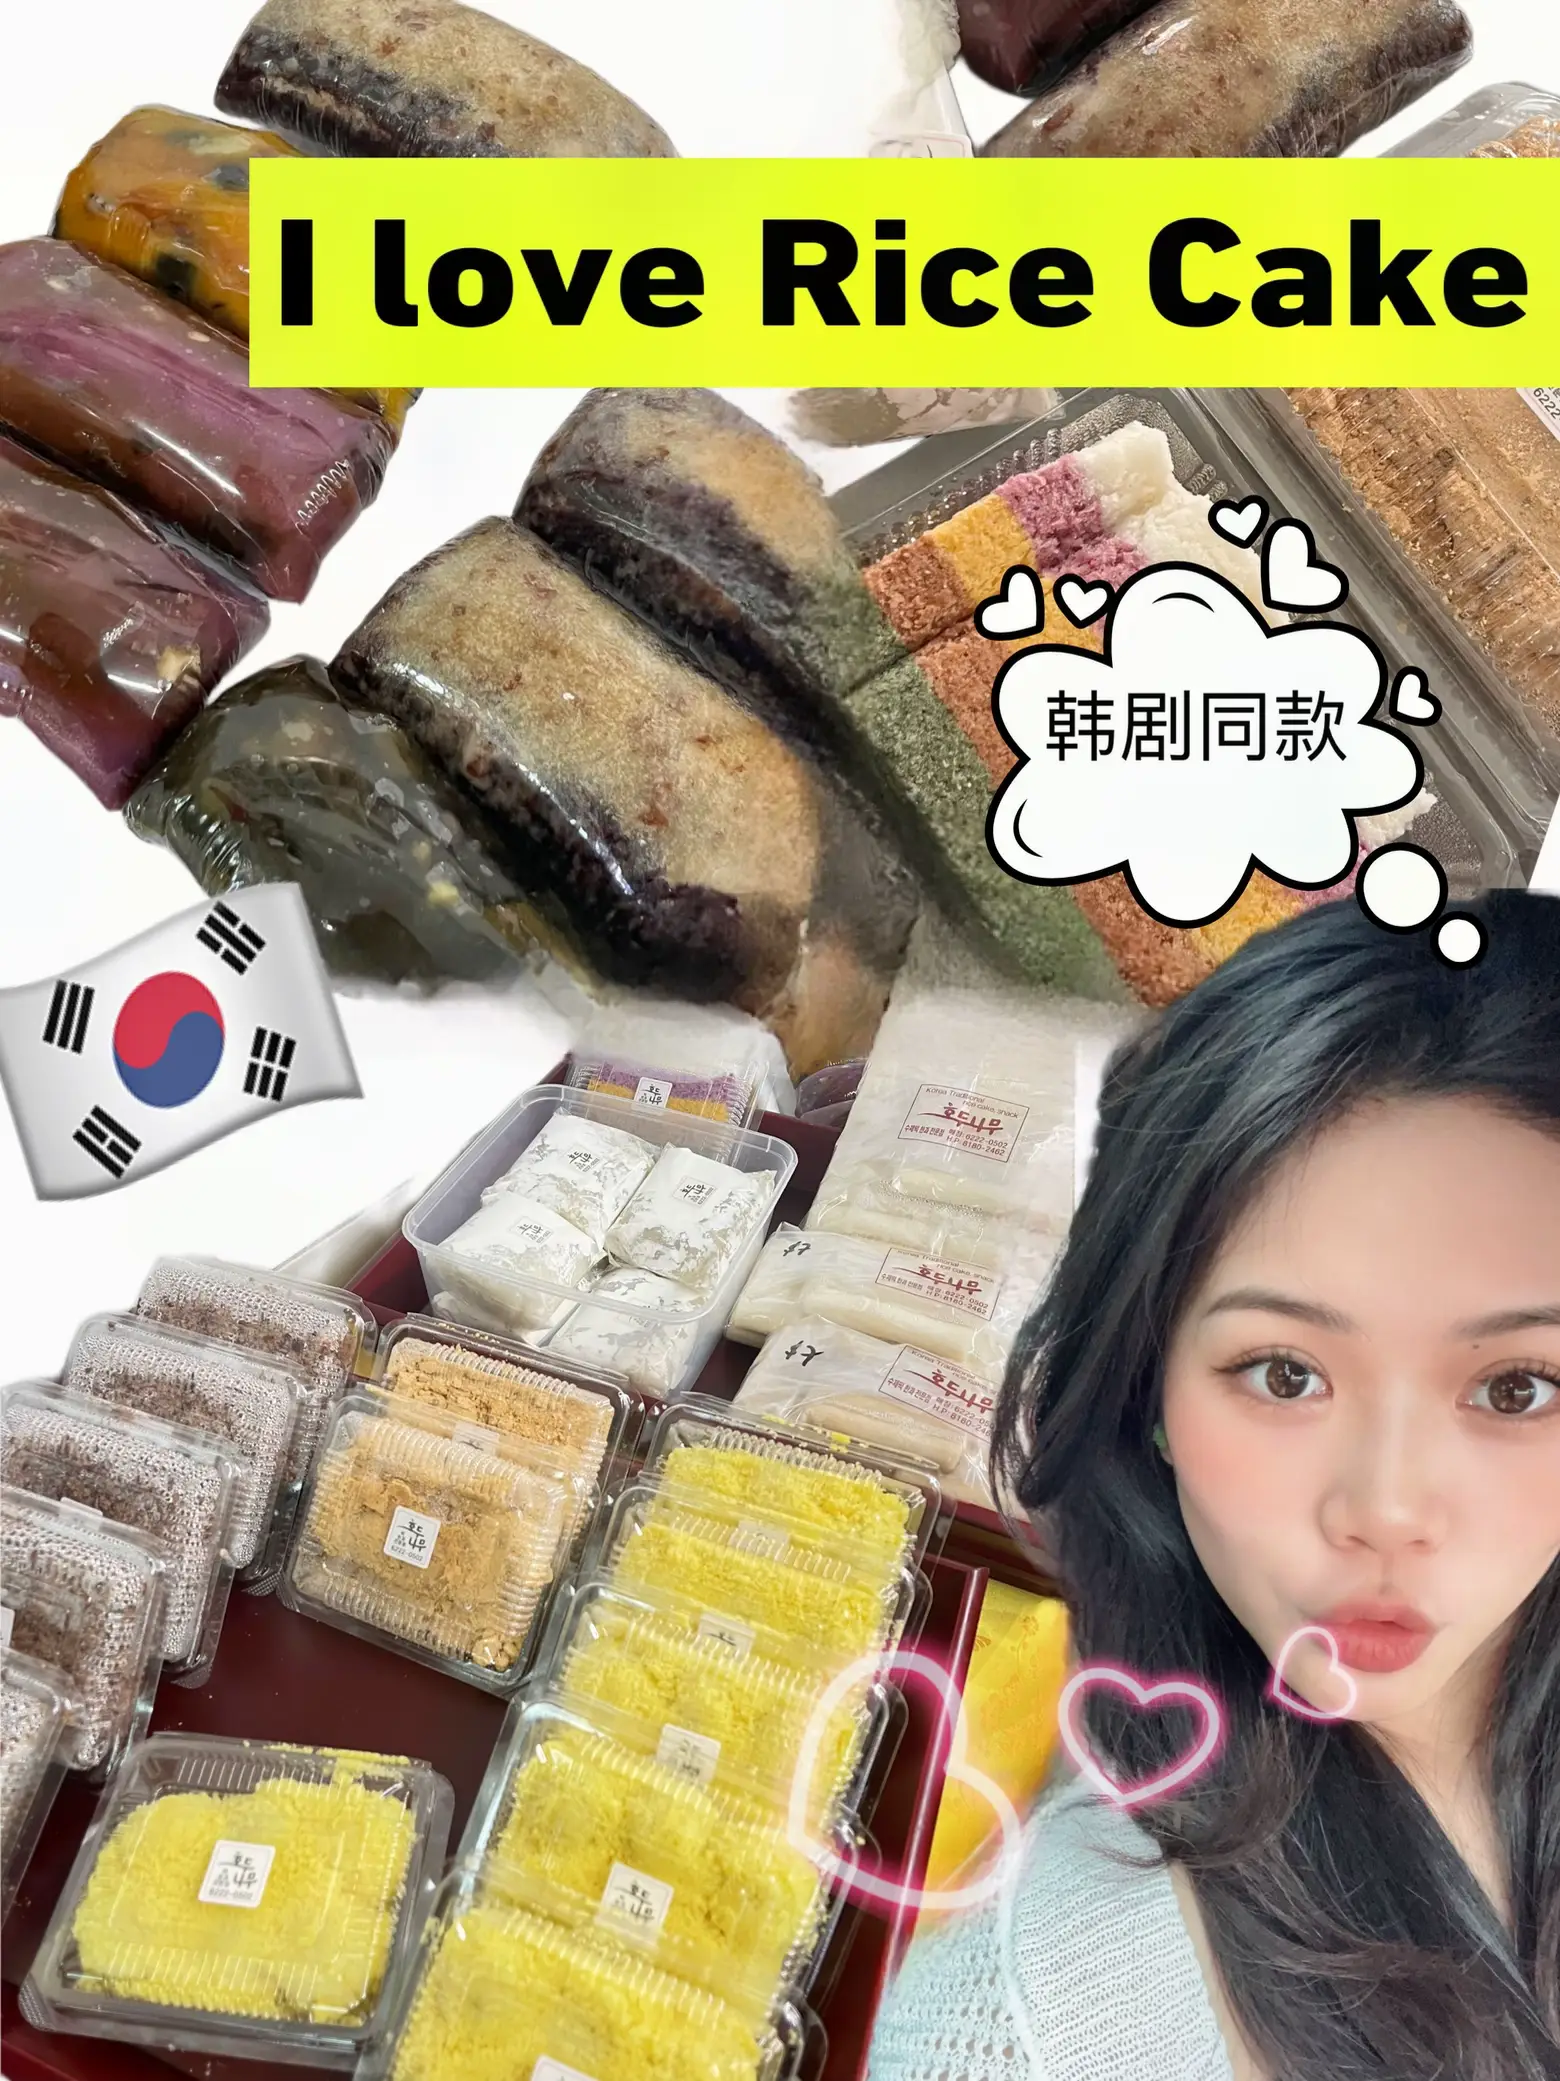 🇸🇬Korean Rice Cake💗100% Korean certified🇰🇷 | Gallery posted 